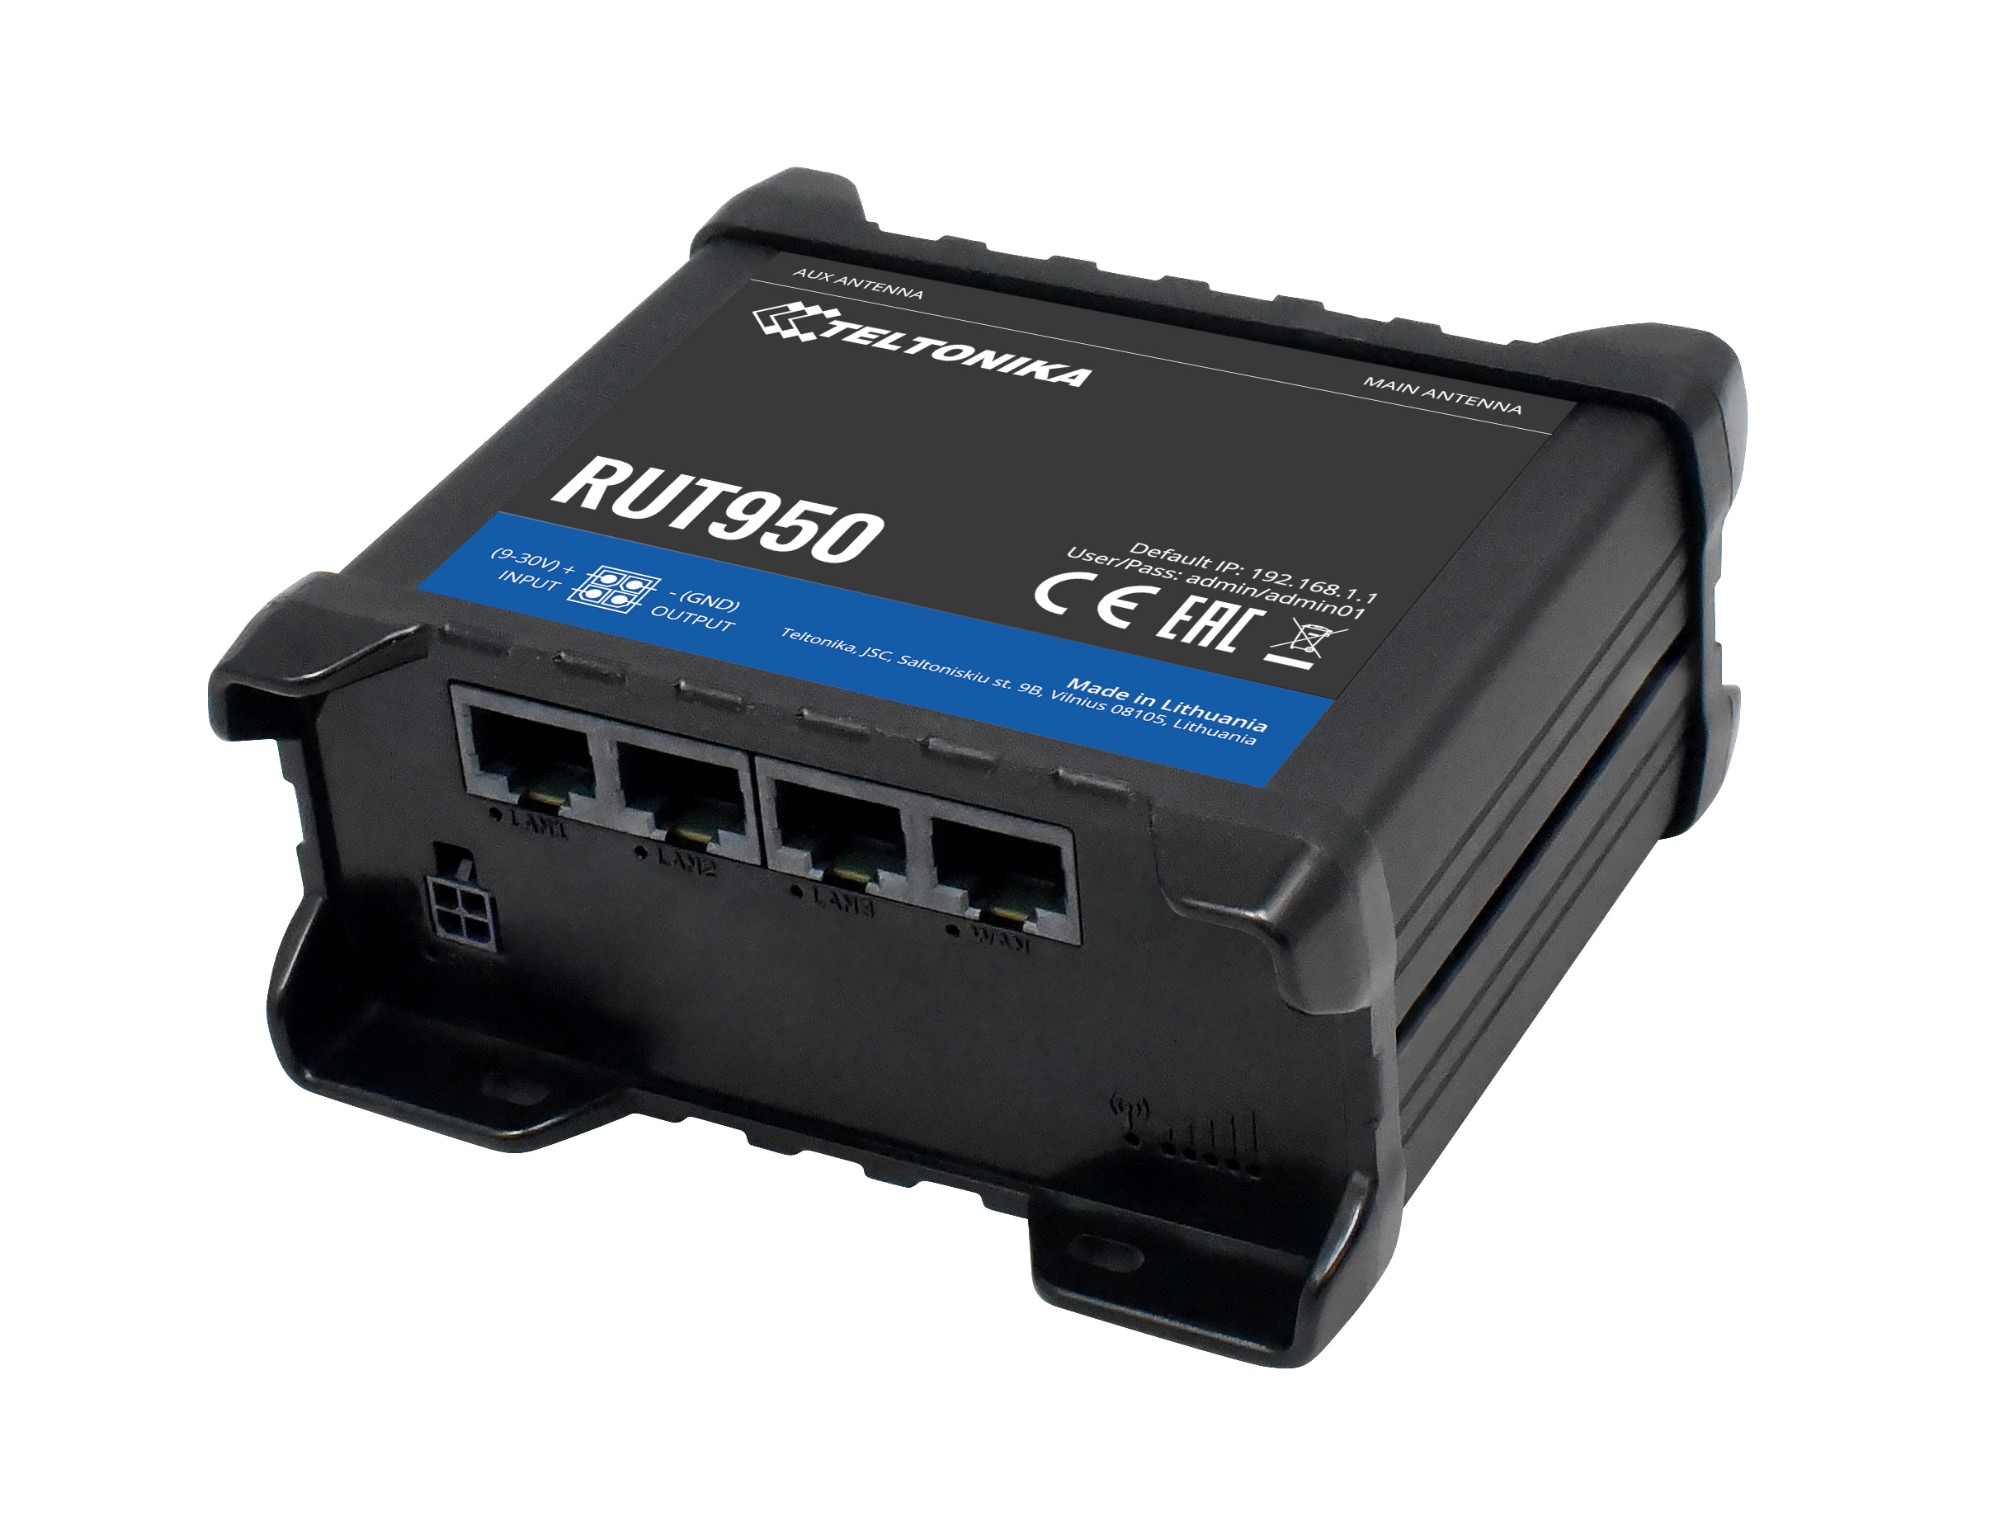 Teltonika RUT950 wireless router Fast Ethernet 4G Black